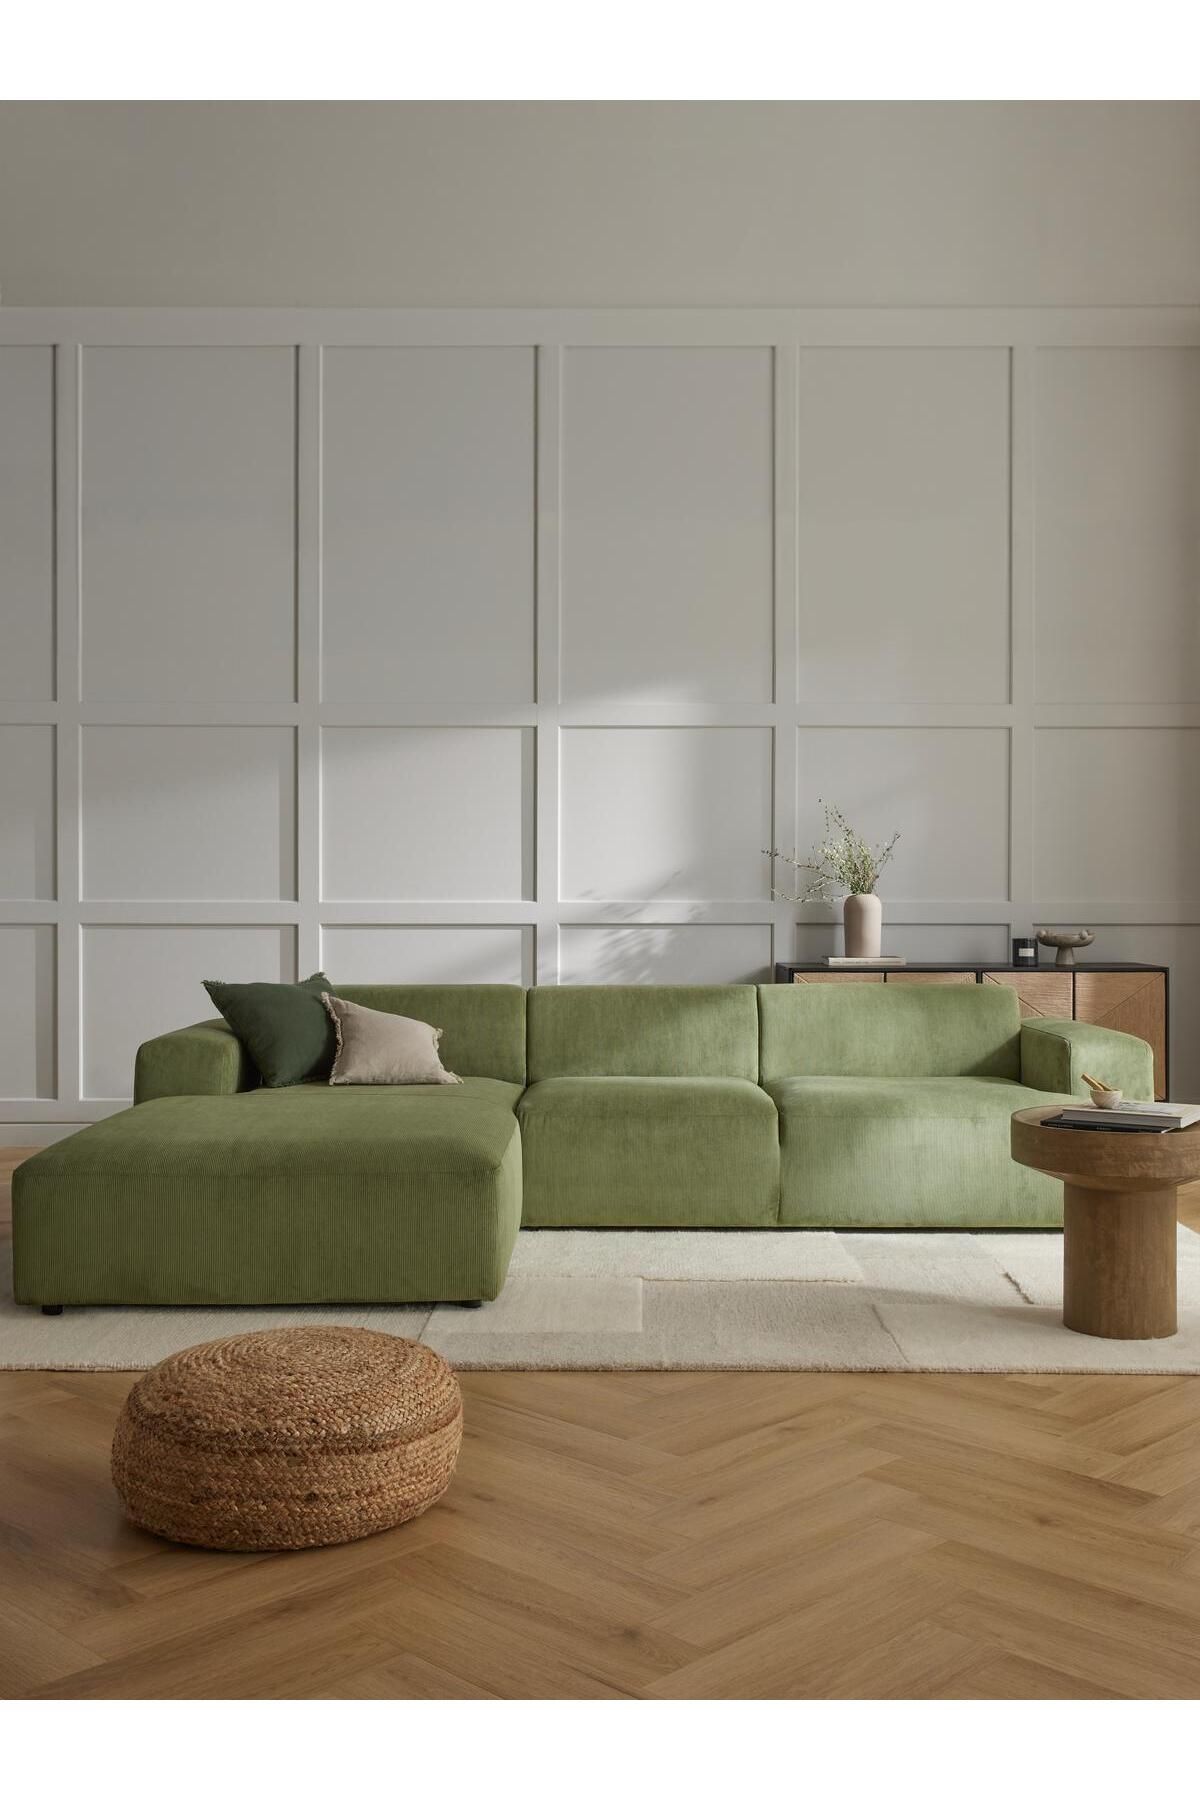 S Home Design Concept Molly Fitilli Yağ Yeşili Köşe Koltuk Sol Köşe